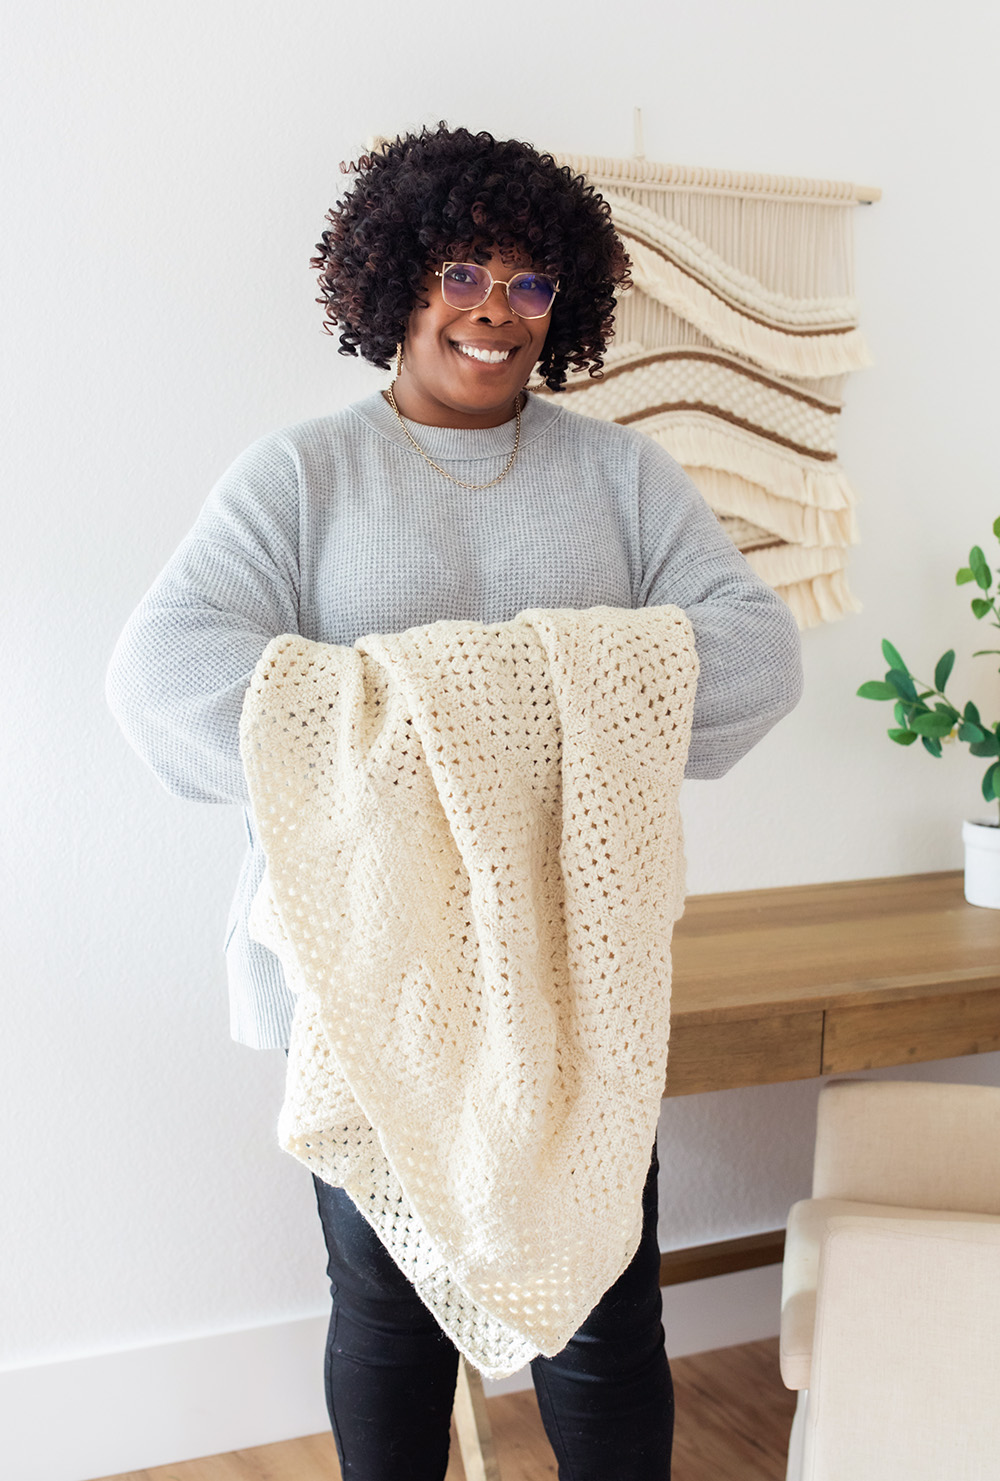 Granny Squares Crochet Cream Blanket - Toni Lipsey